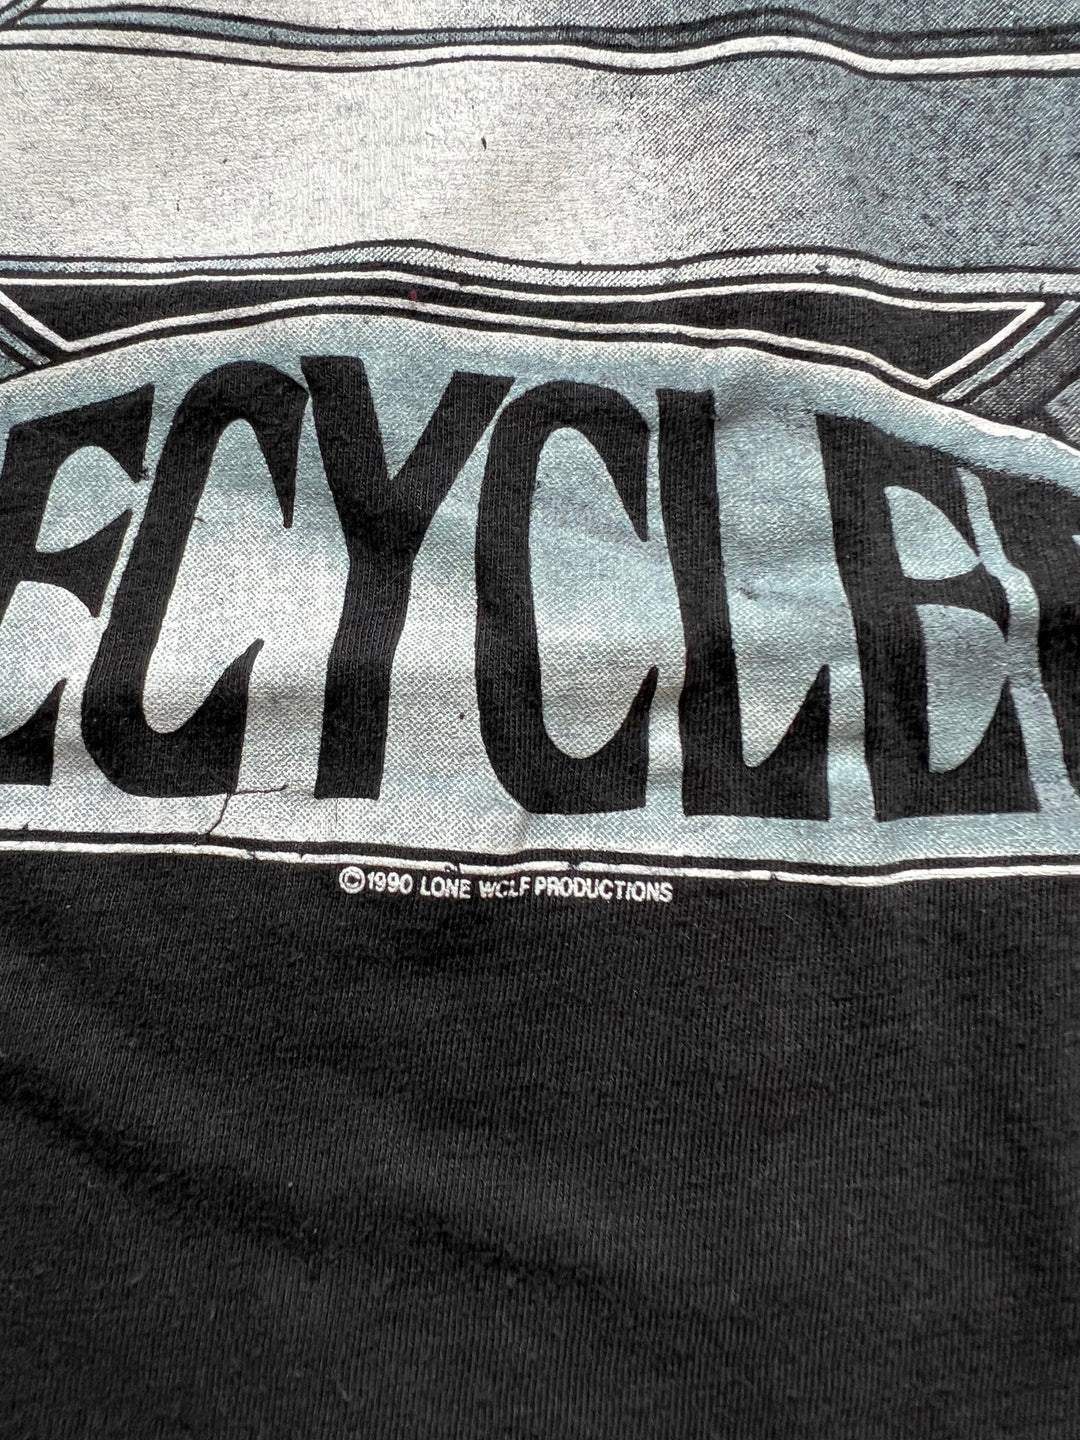 Vintage 1991 ZZtop Recycler Tour. Large